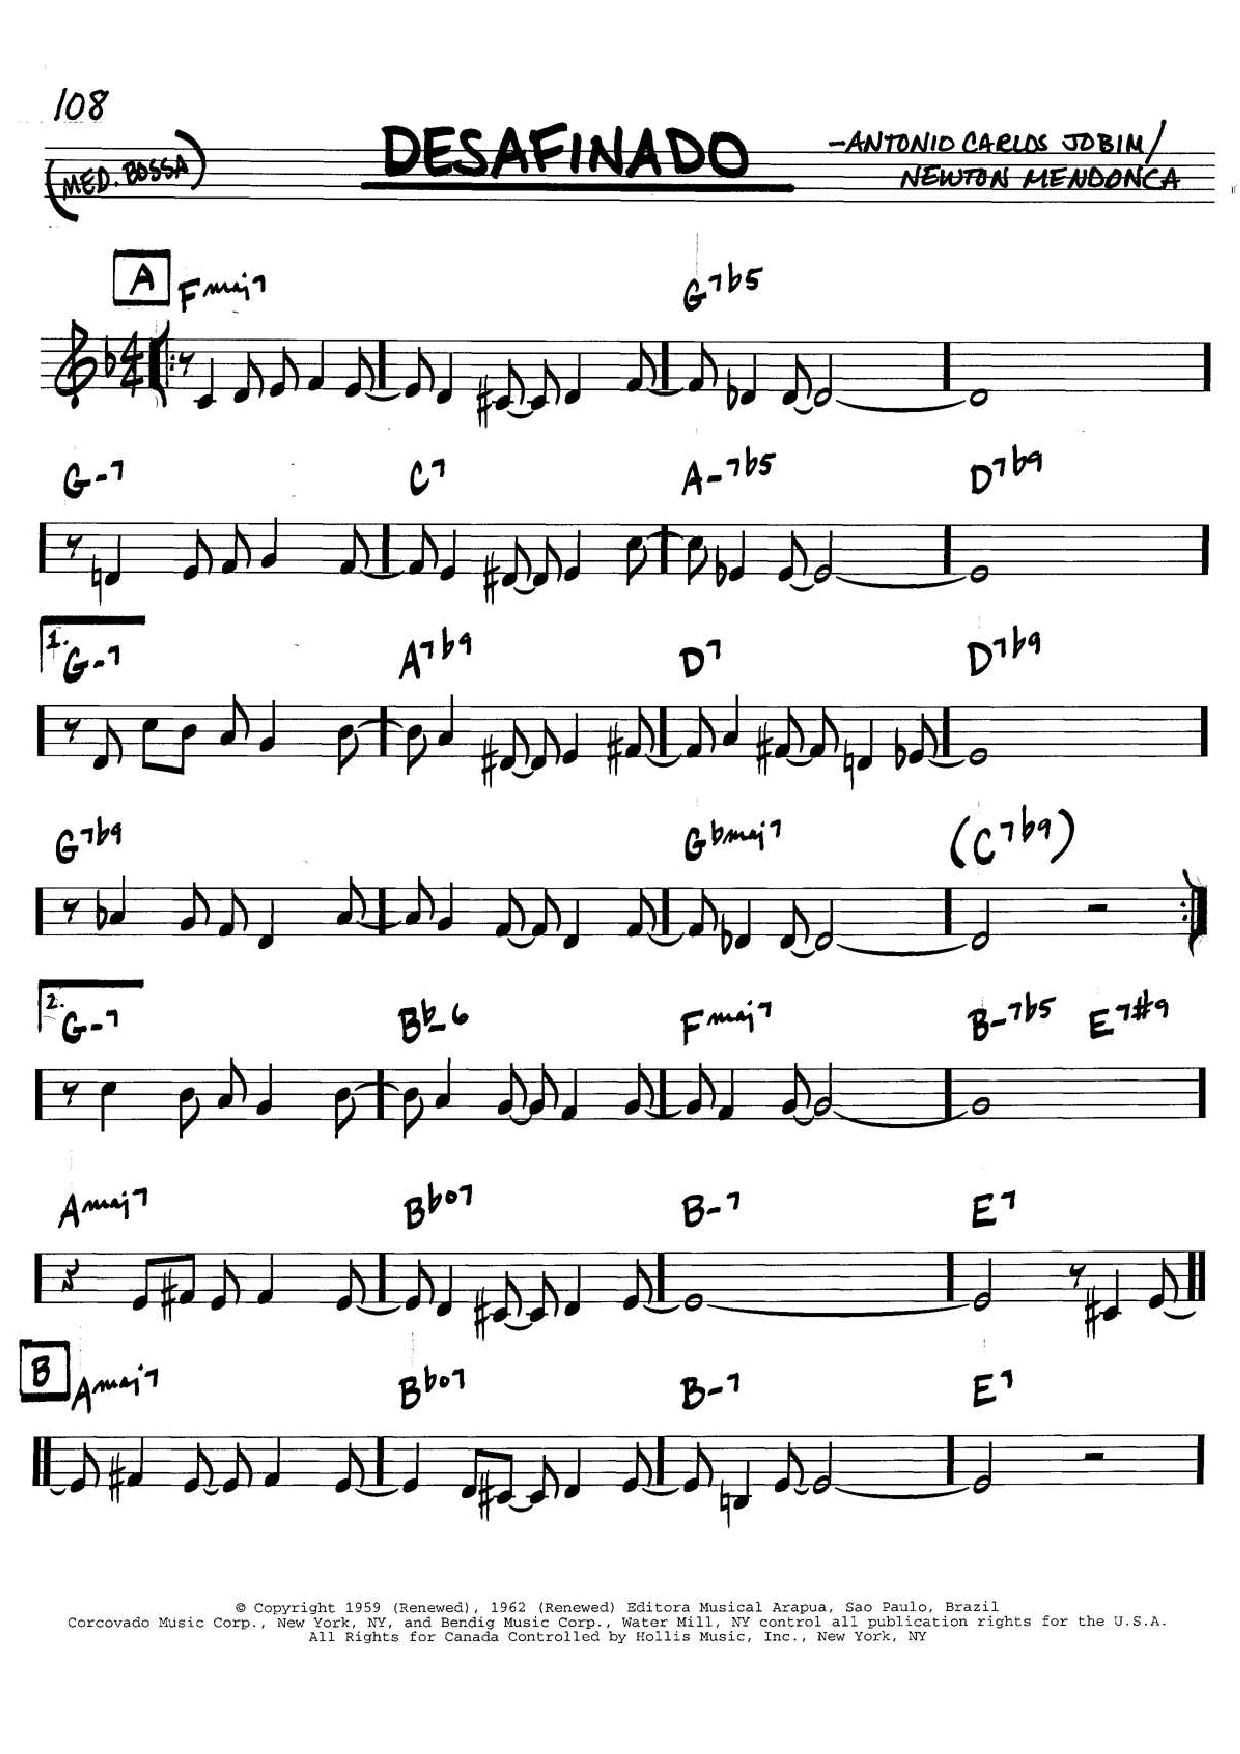 Antonio Carlos Jobim Desafinado (Slightly Out Of Tune) sheet music notes and chords. Download Printable PDF.